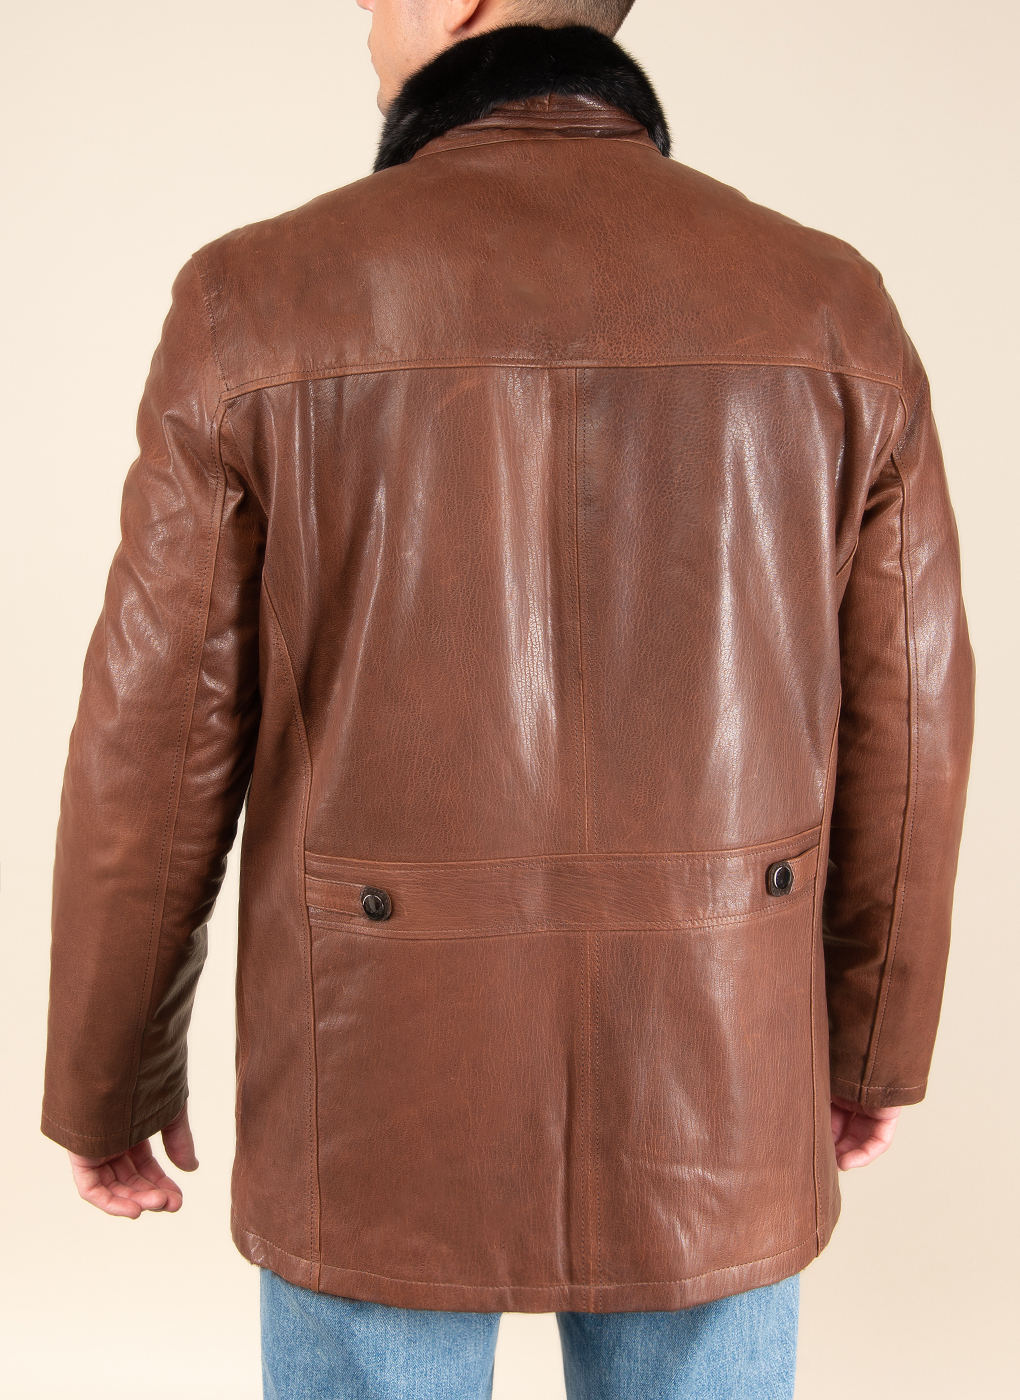 Кожаная куртка мужская Ennur 50435 коричневая 52 RU